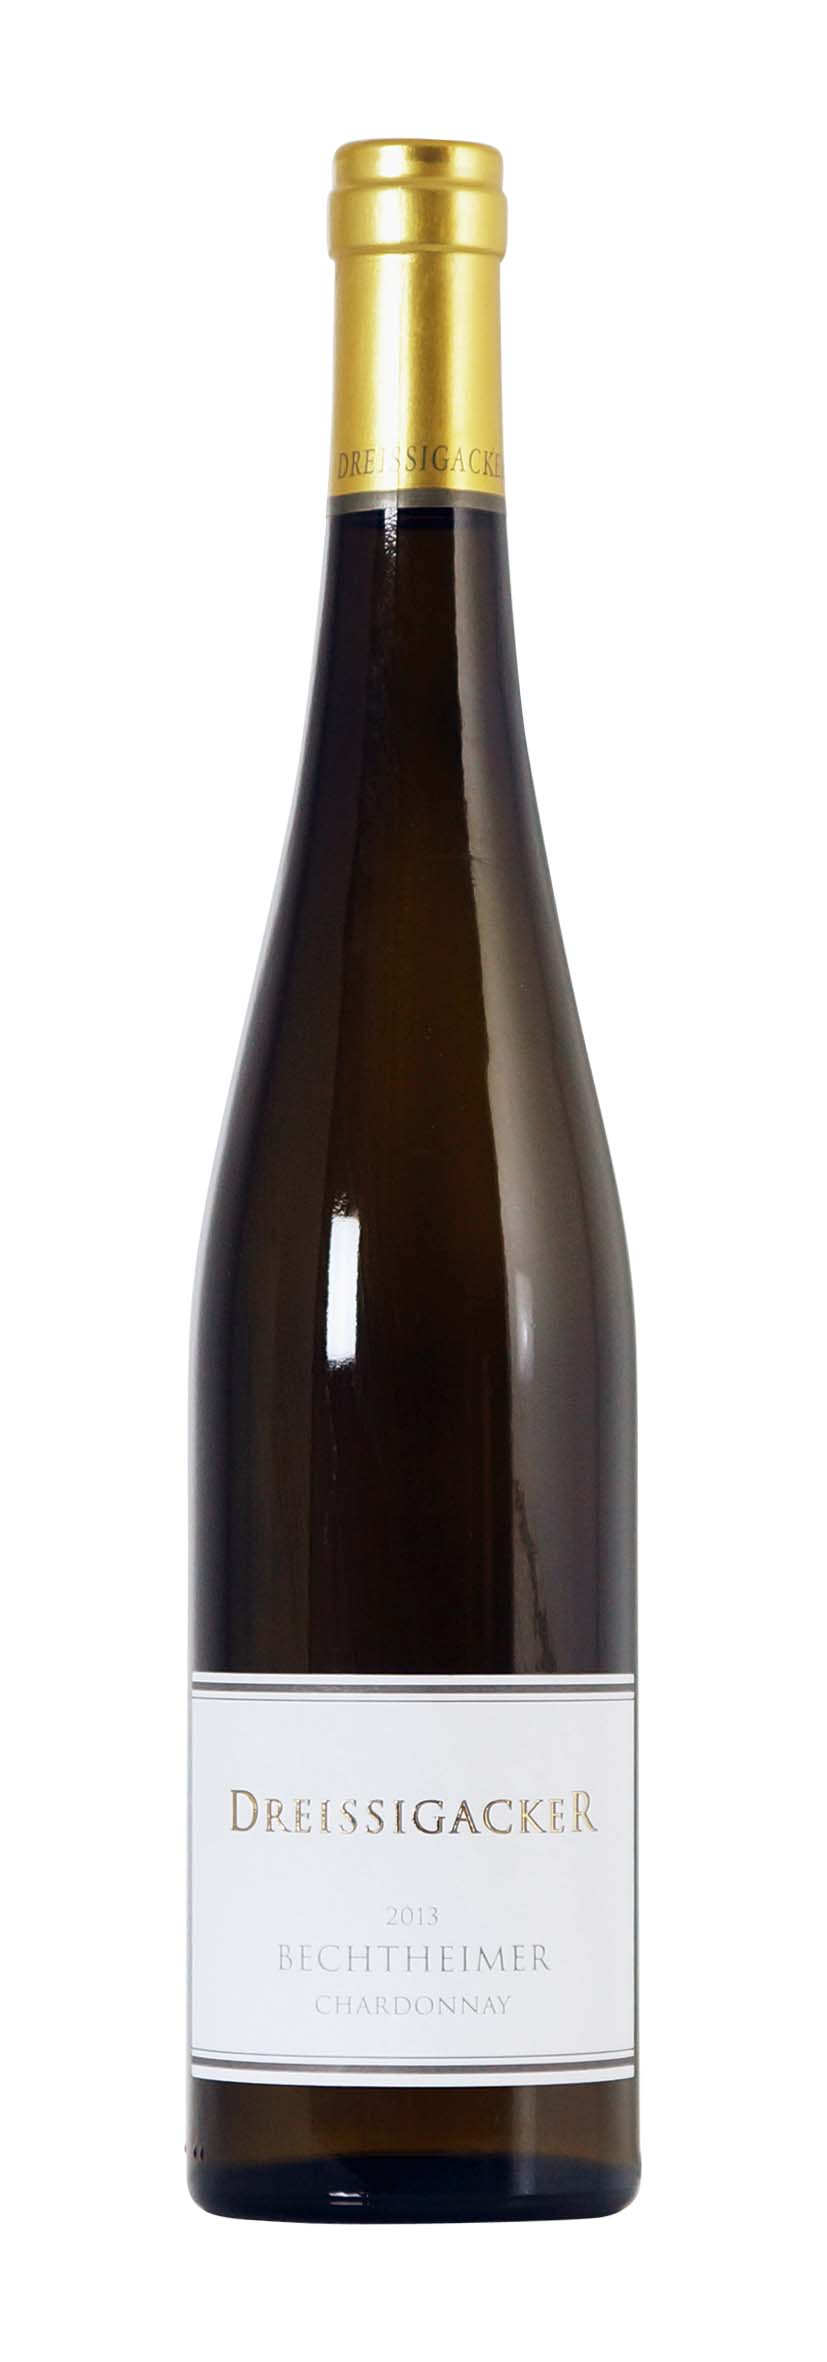 Bechtheimer Chardonnay Qualitätswein trocken 2013